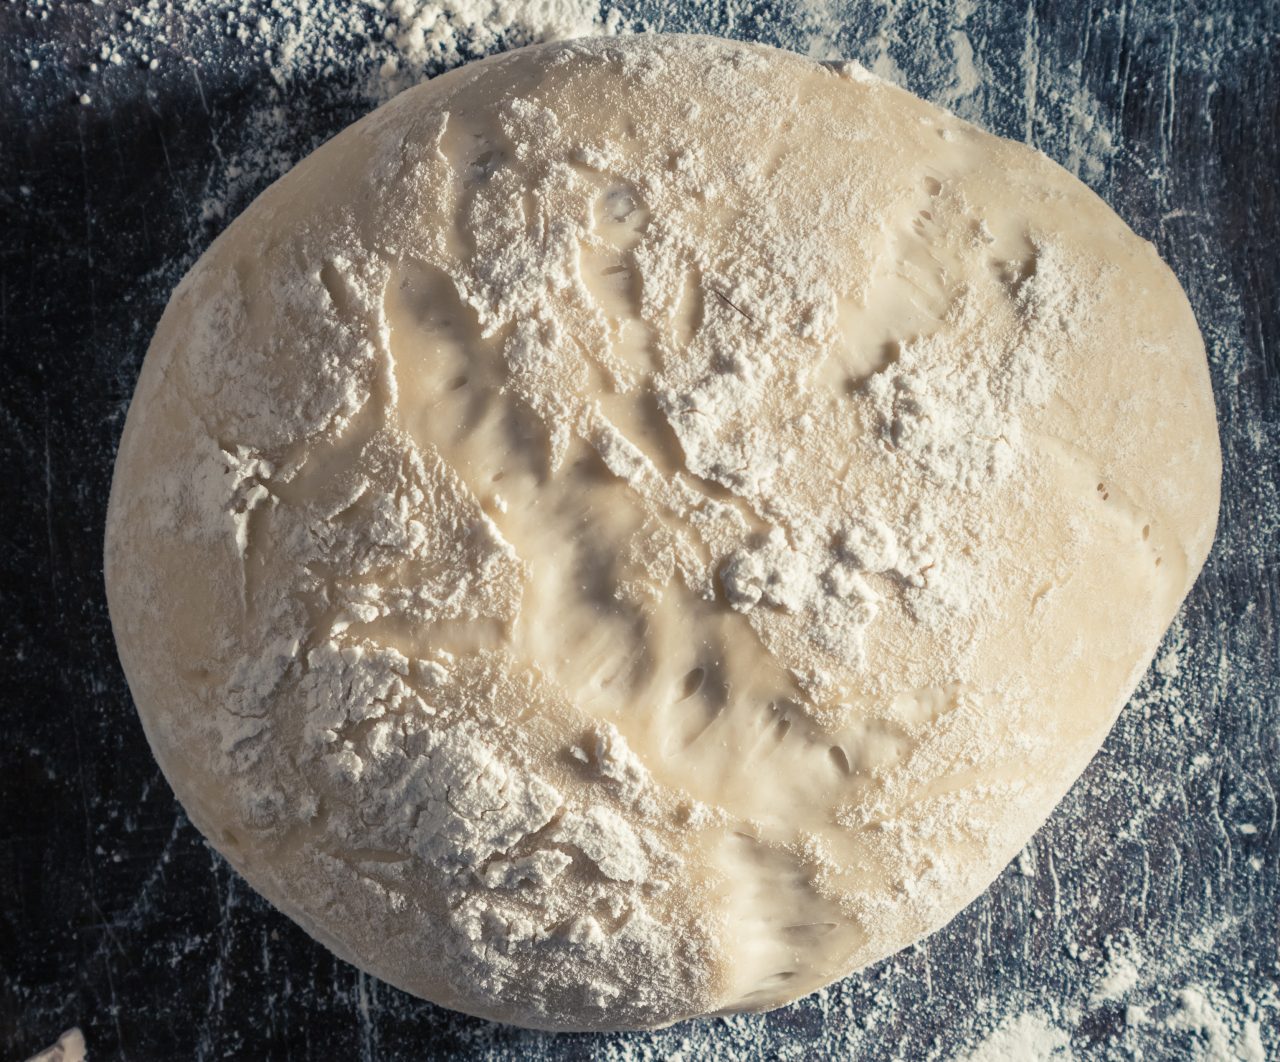  fresh dough on floured wooden surface